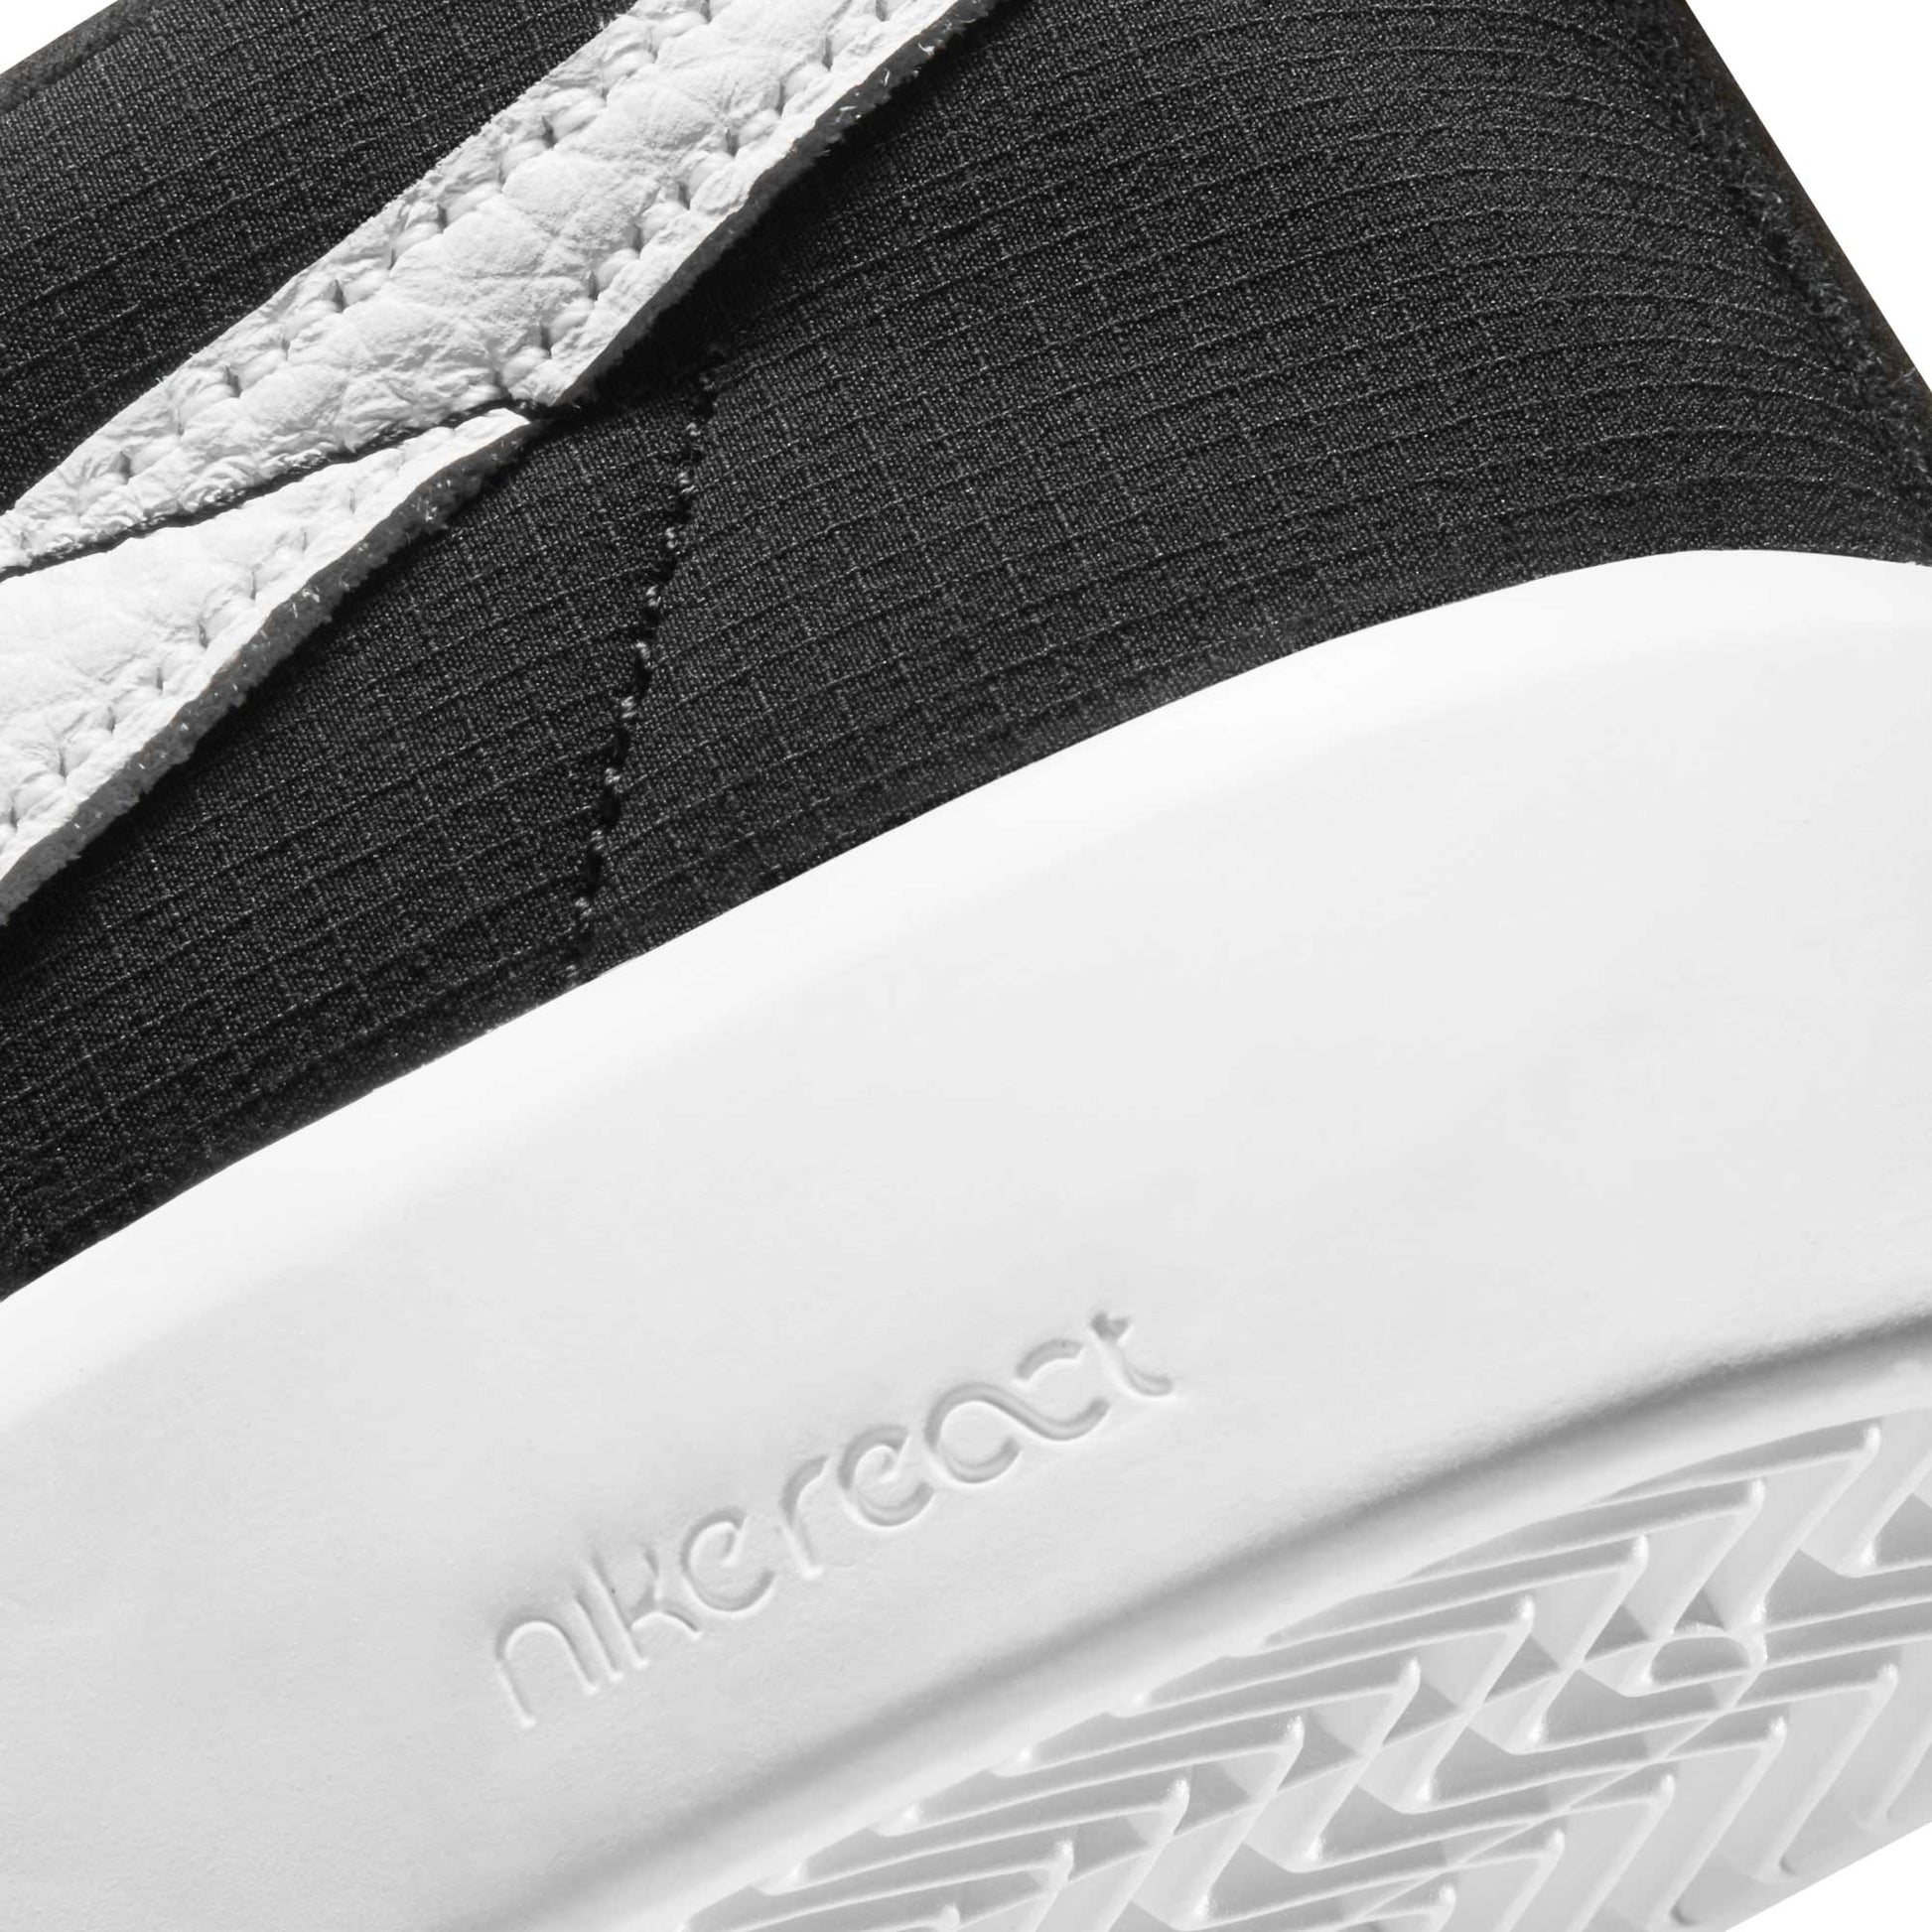 Nike SB Bruin React, black/white-black-anthracite - Tiki Room Skateboards - 8